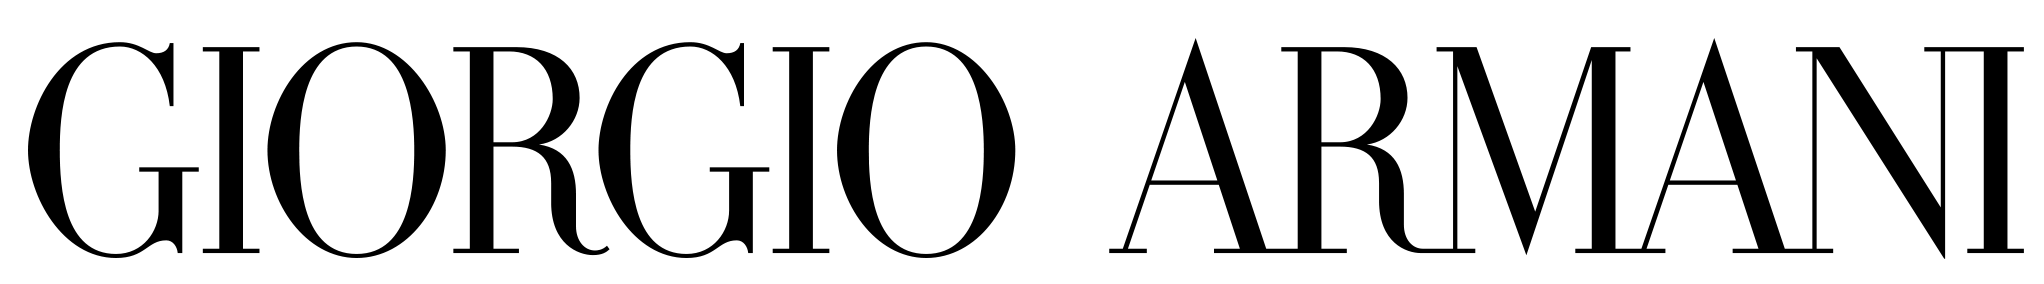 Armani Logo Transparent Image